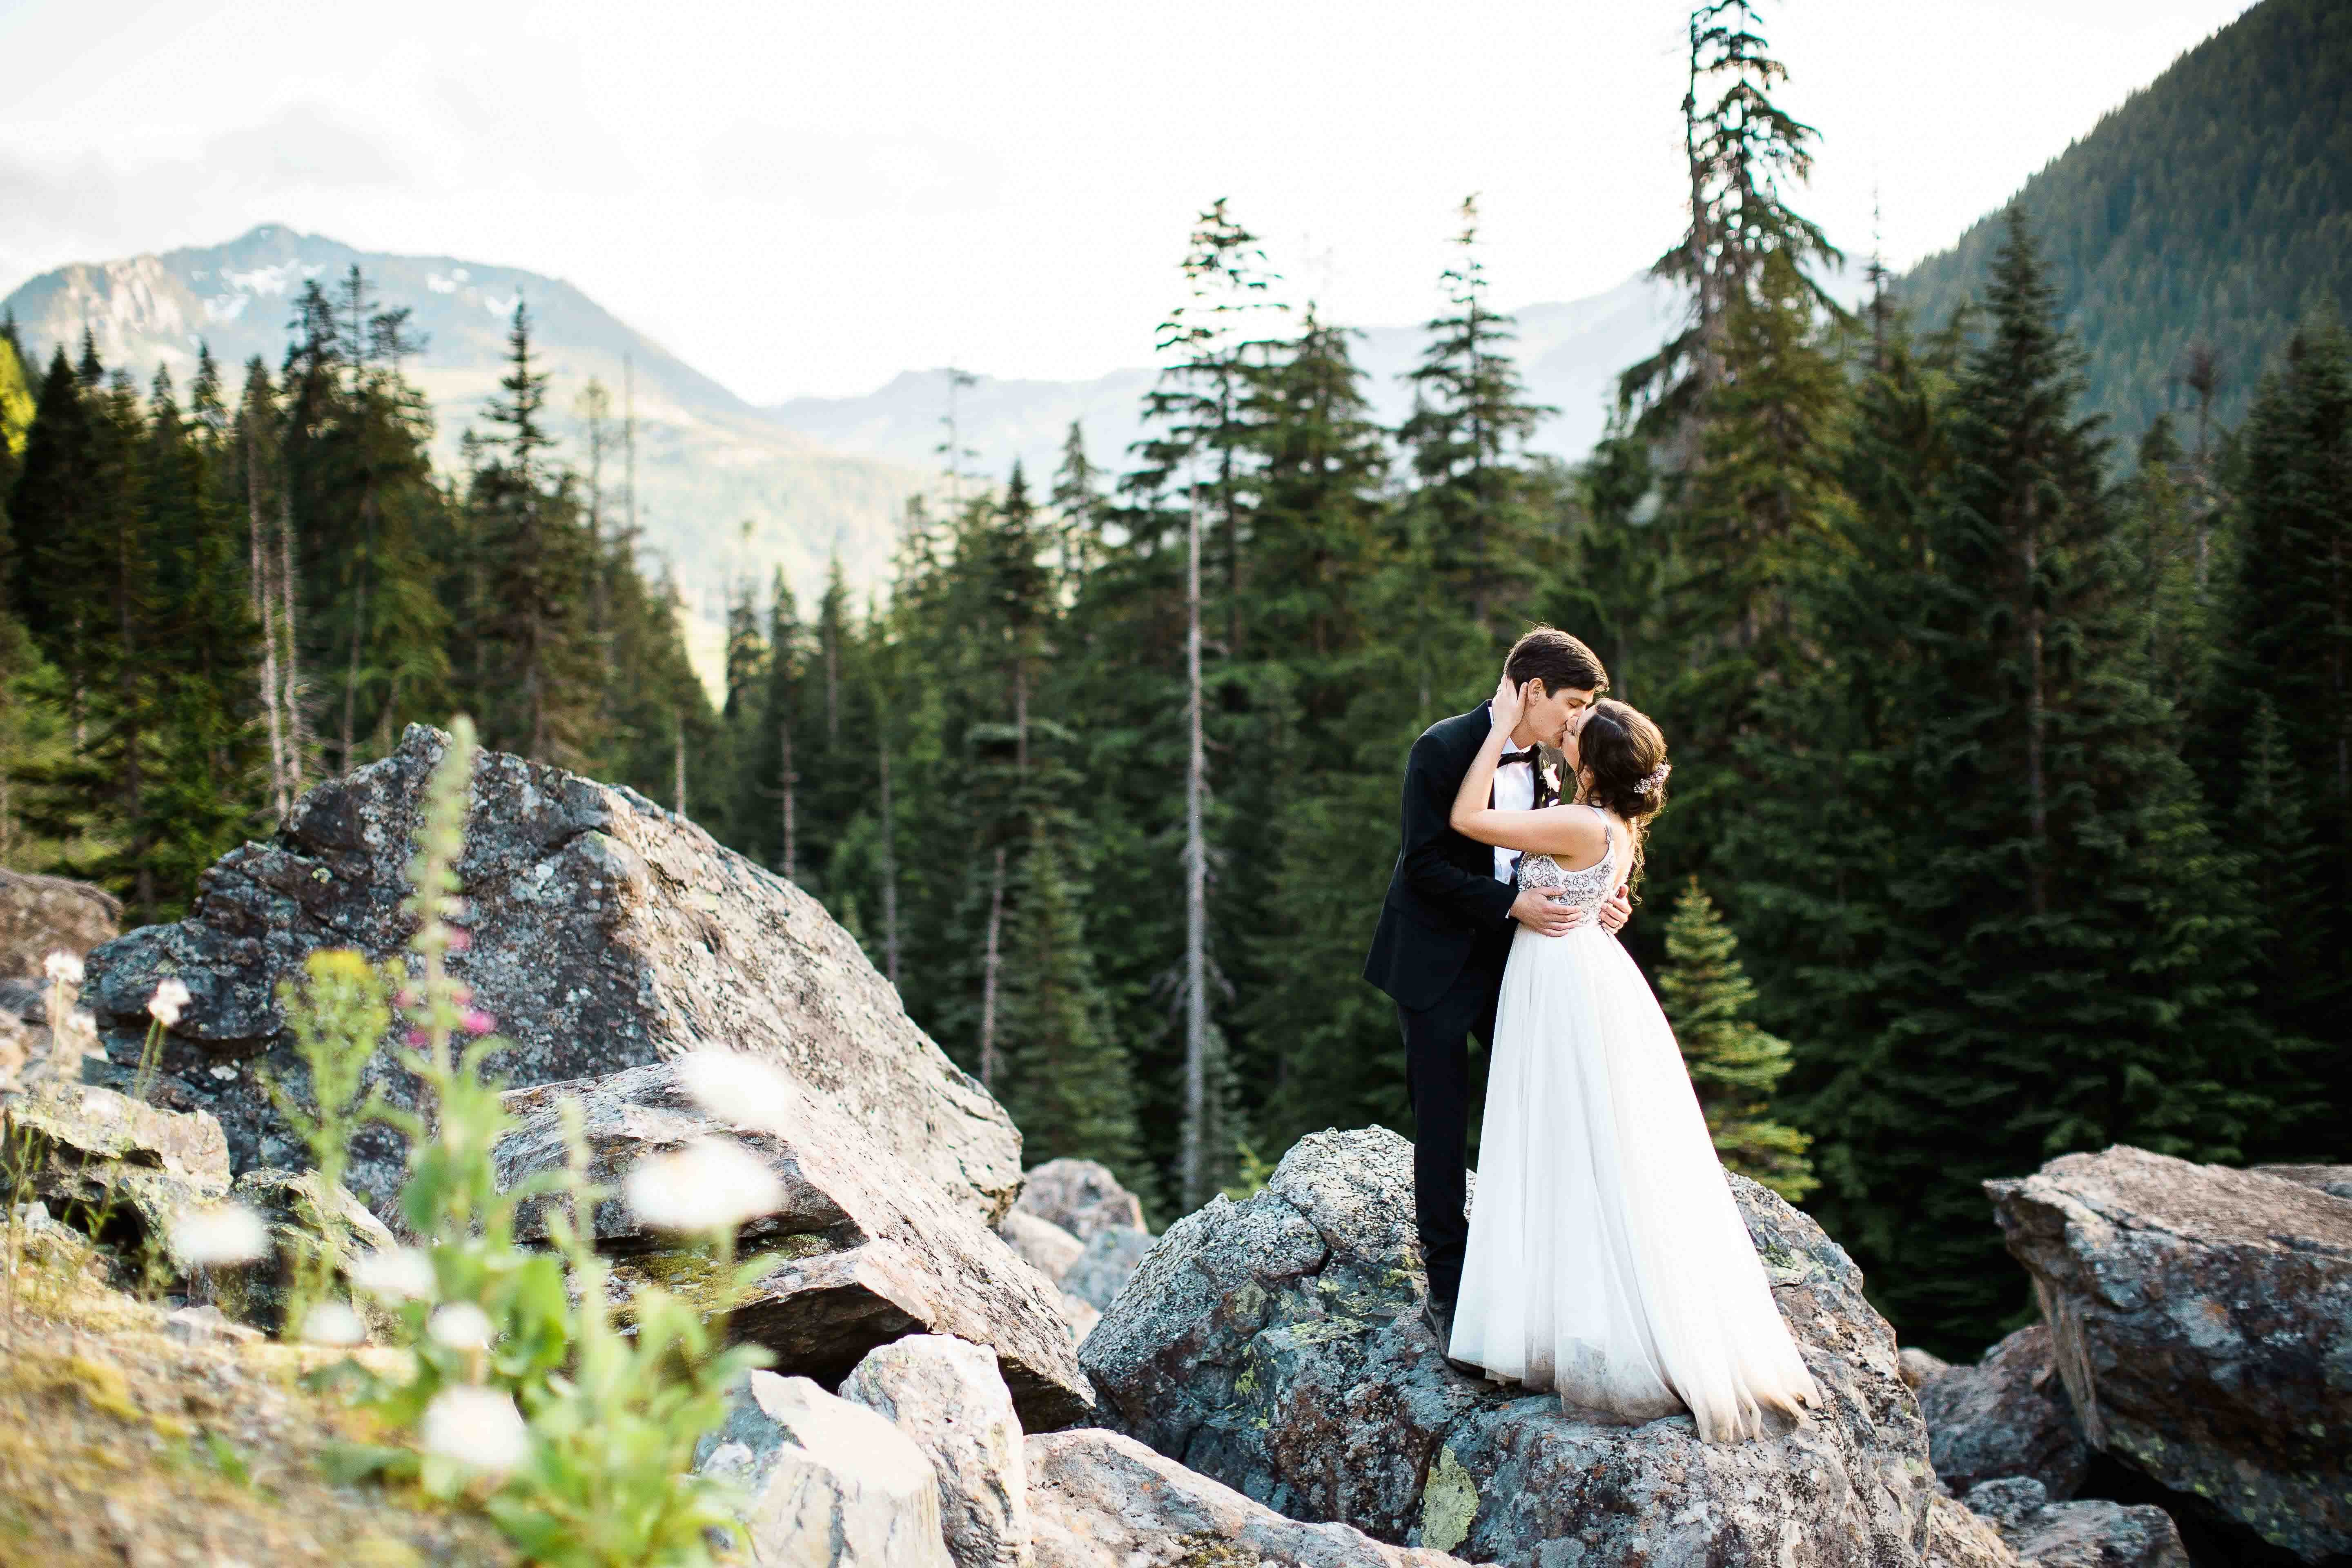 20_elopement-snoqualmie-pass-waterfall-goldcreek-pond-washington-seattle-photographer-wedding-17